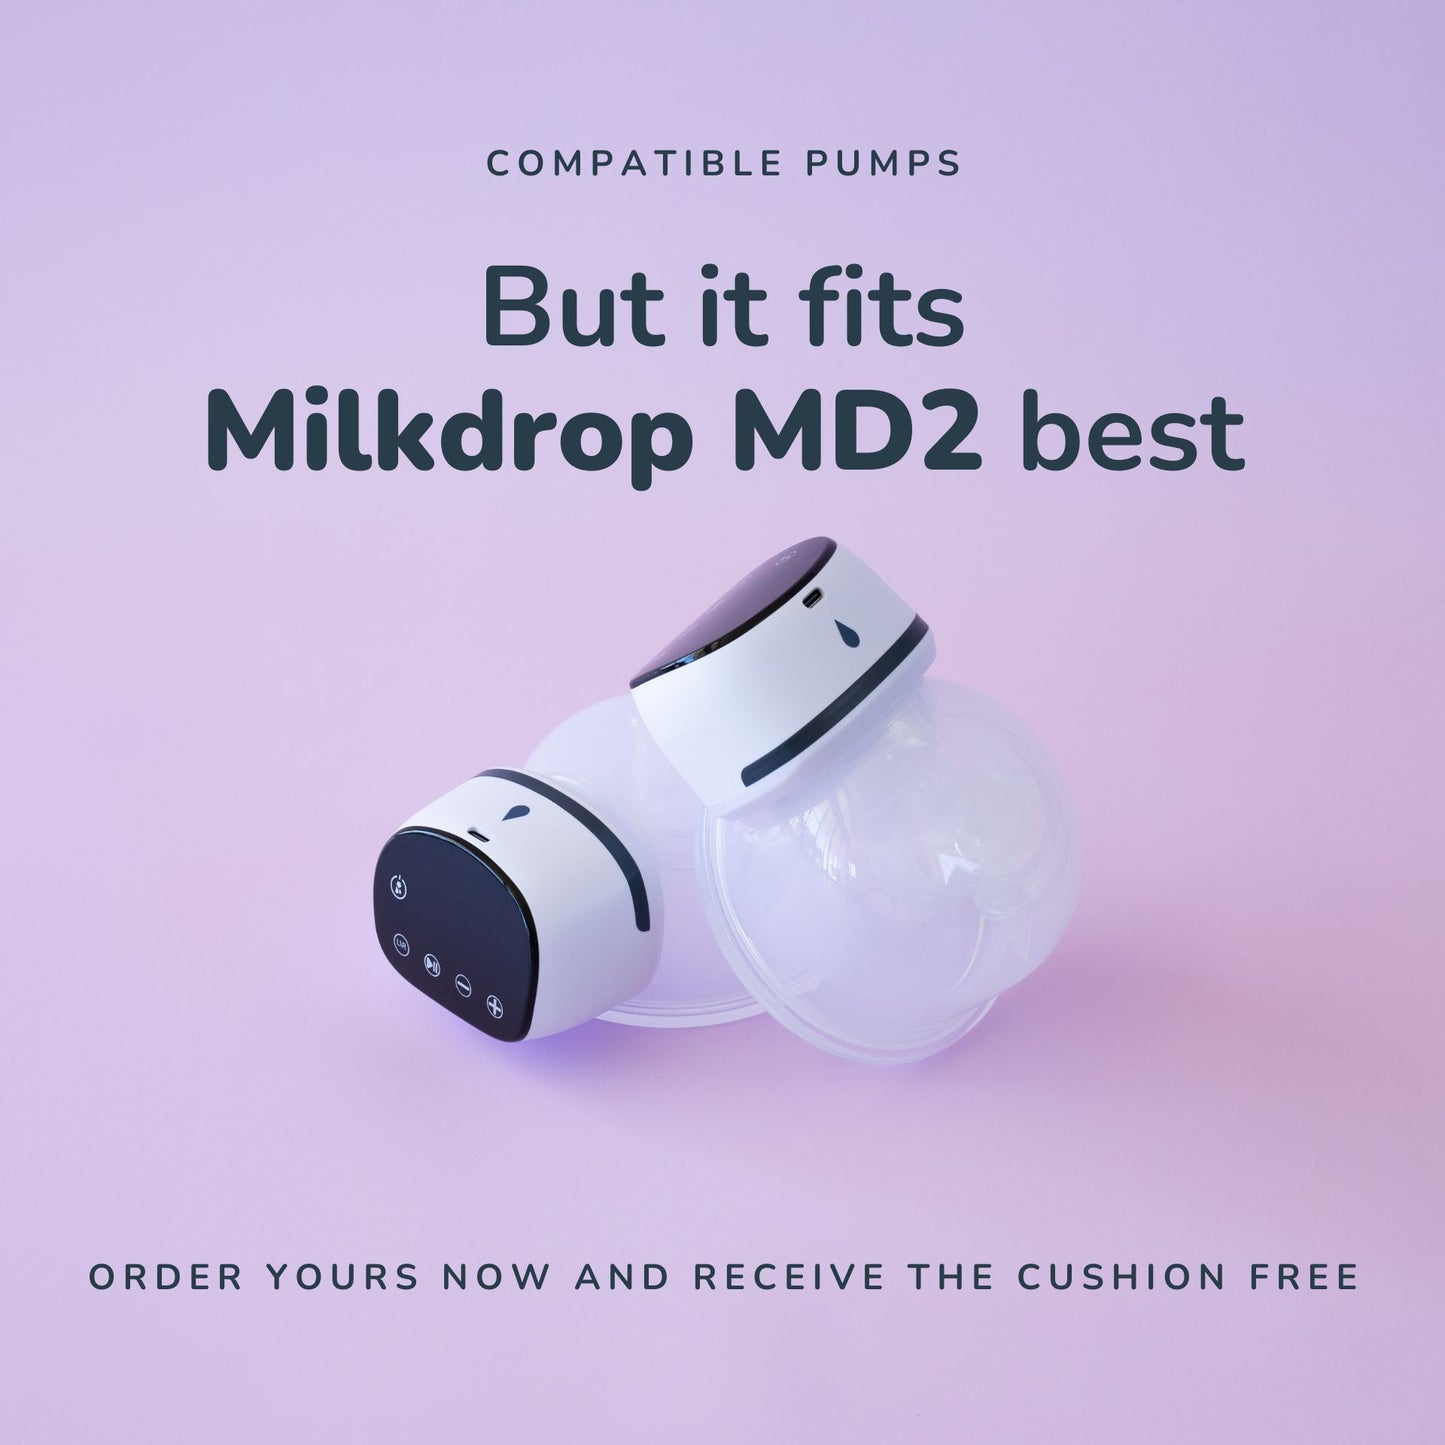 Milkdrop Breast Pump Cushion - wearable (2pc)